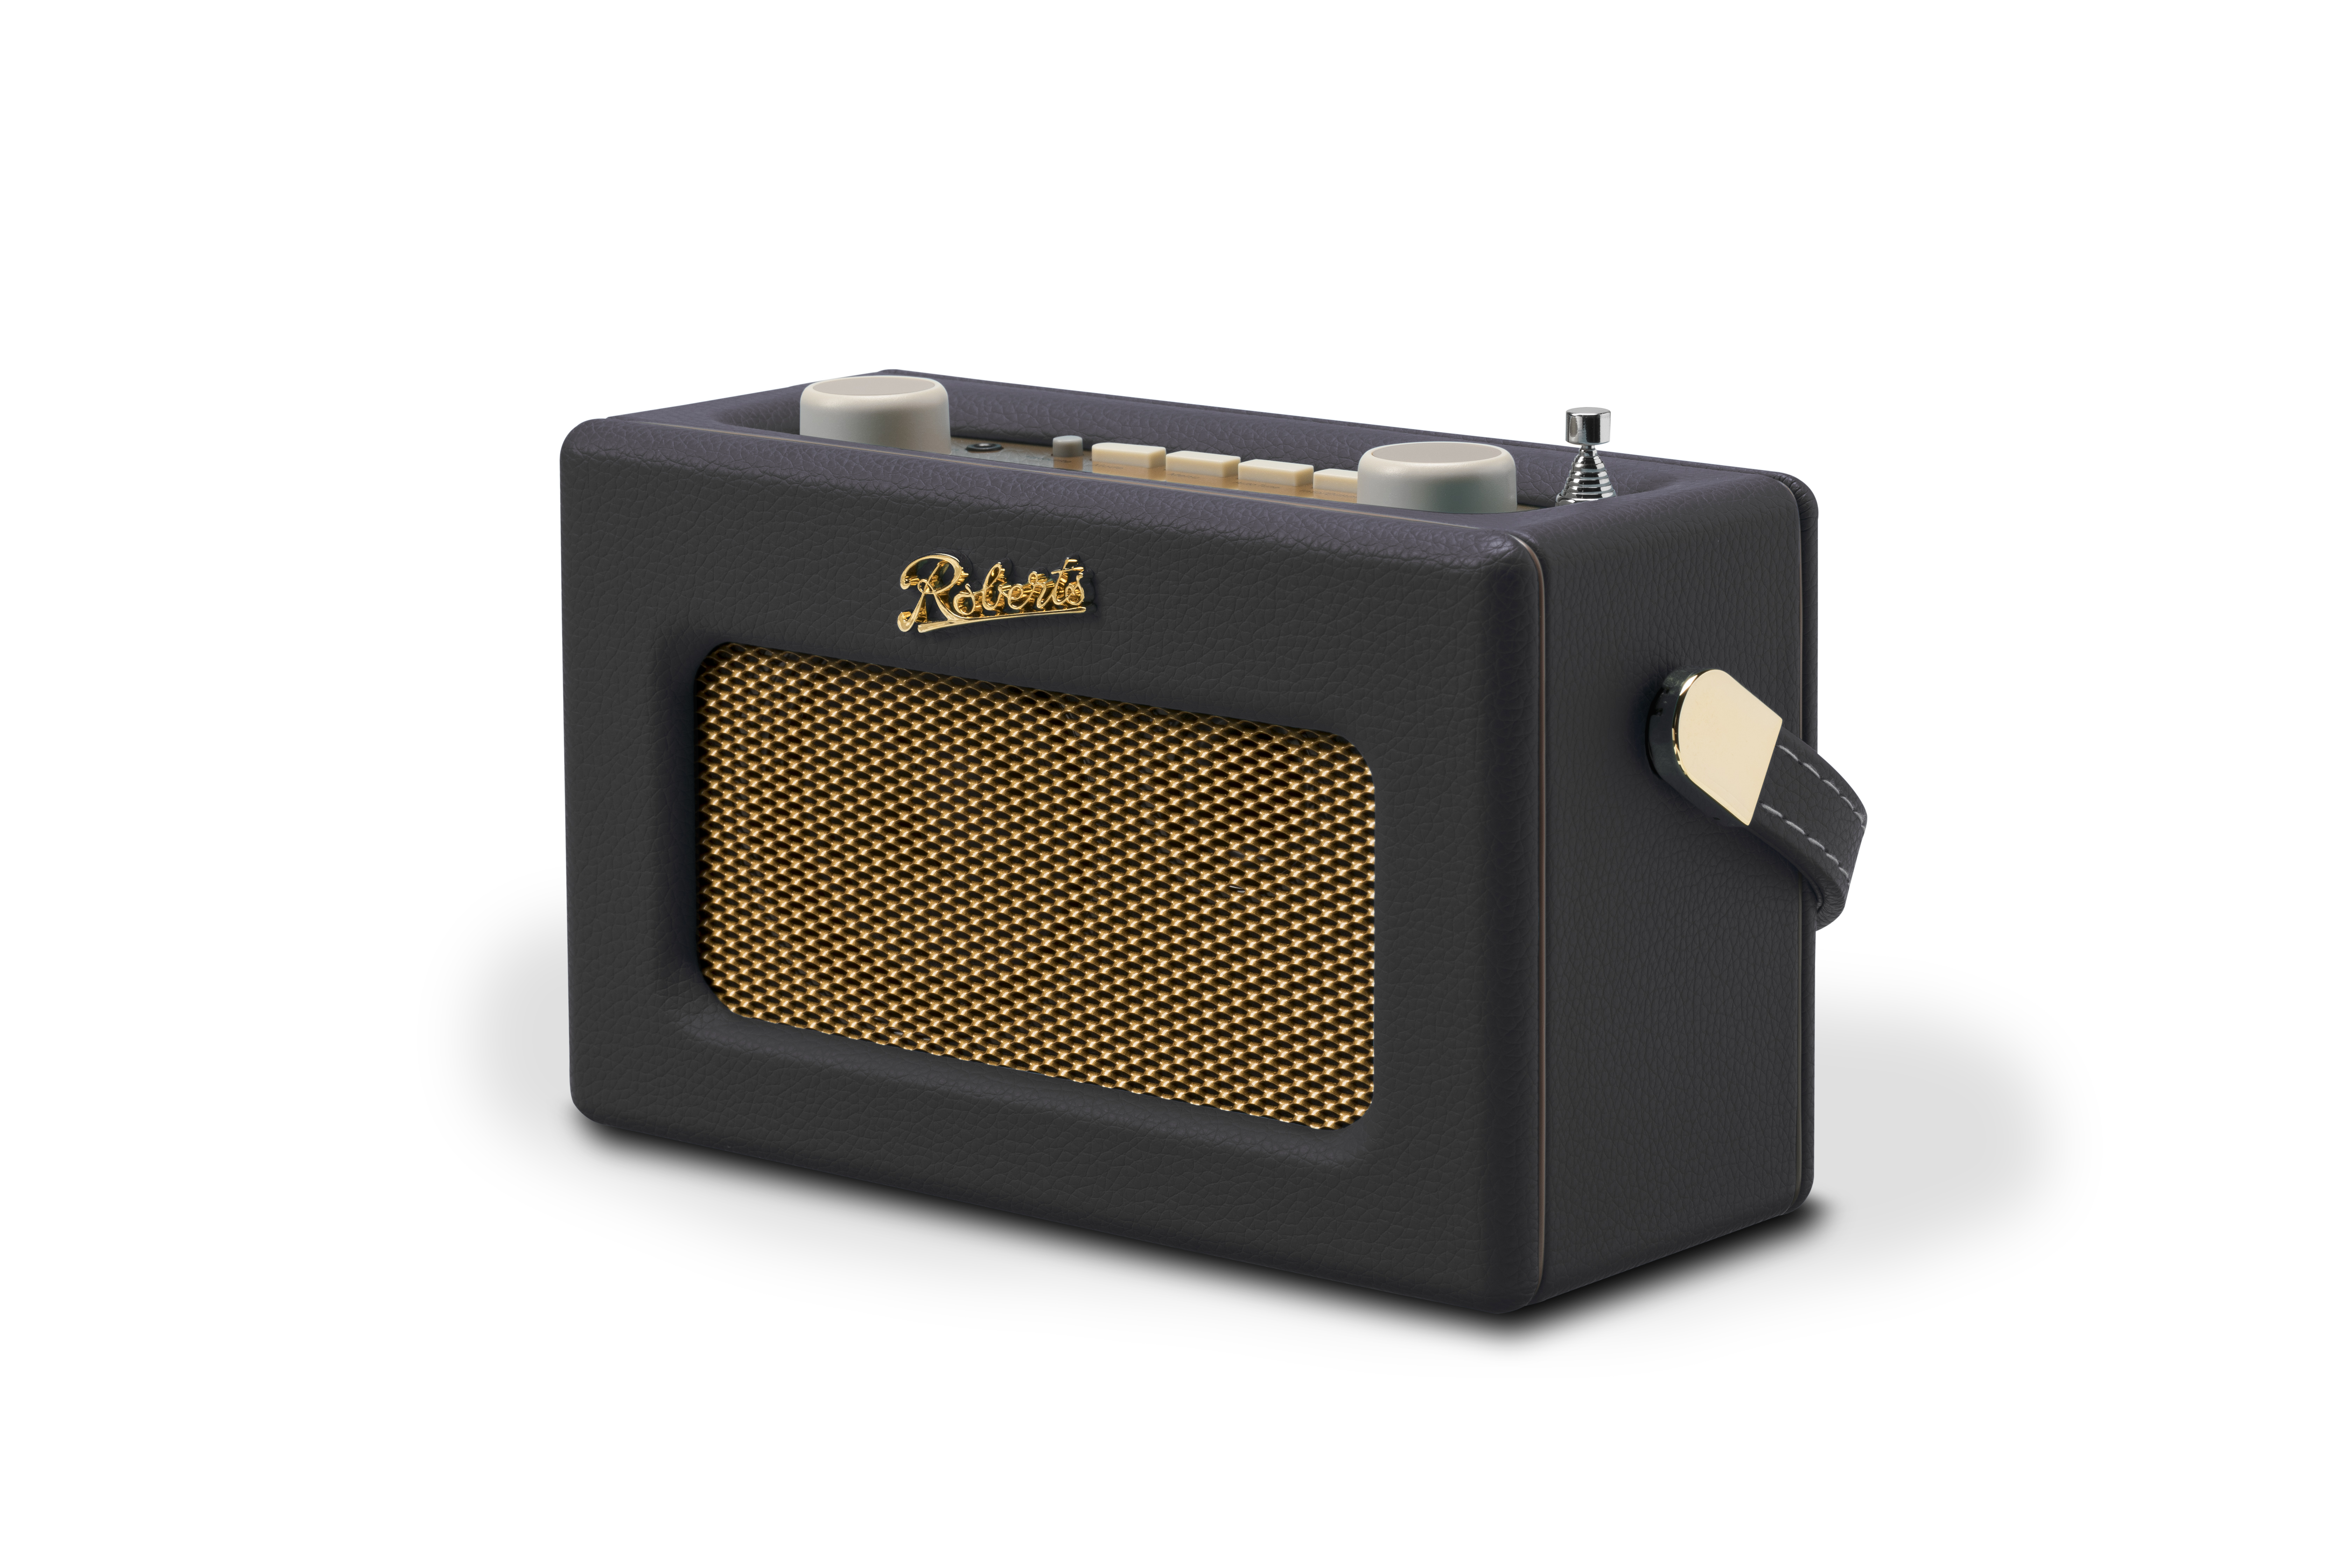 ROBERTS RADIO Schwarz mit black BT | Bluetooth Revival DAB+/FM Radio DAB+, Uno Digitalradio, | tragbares